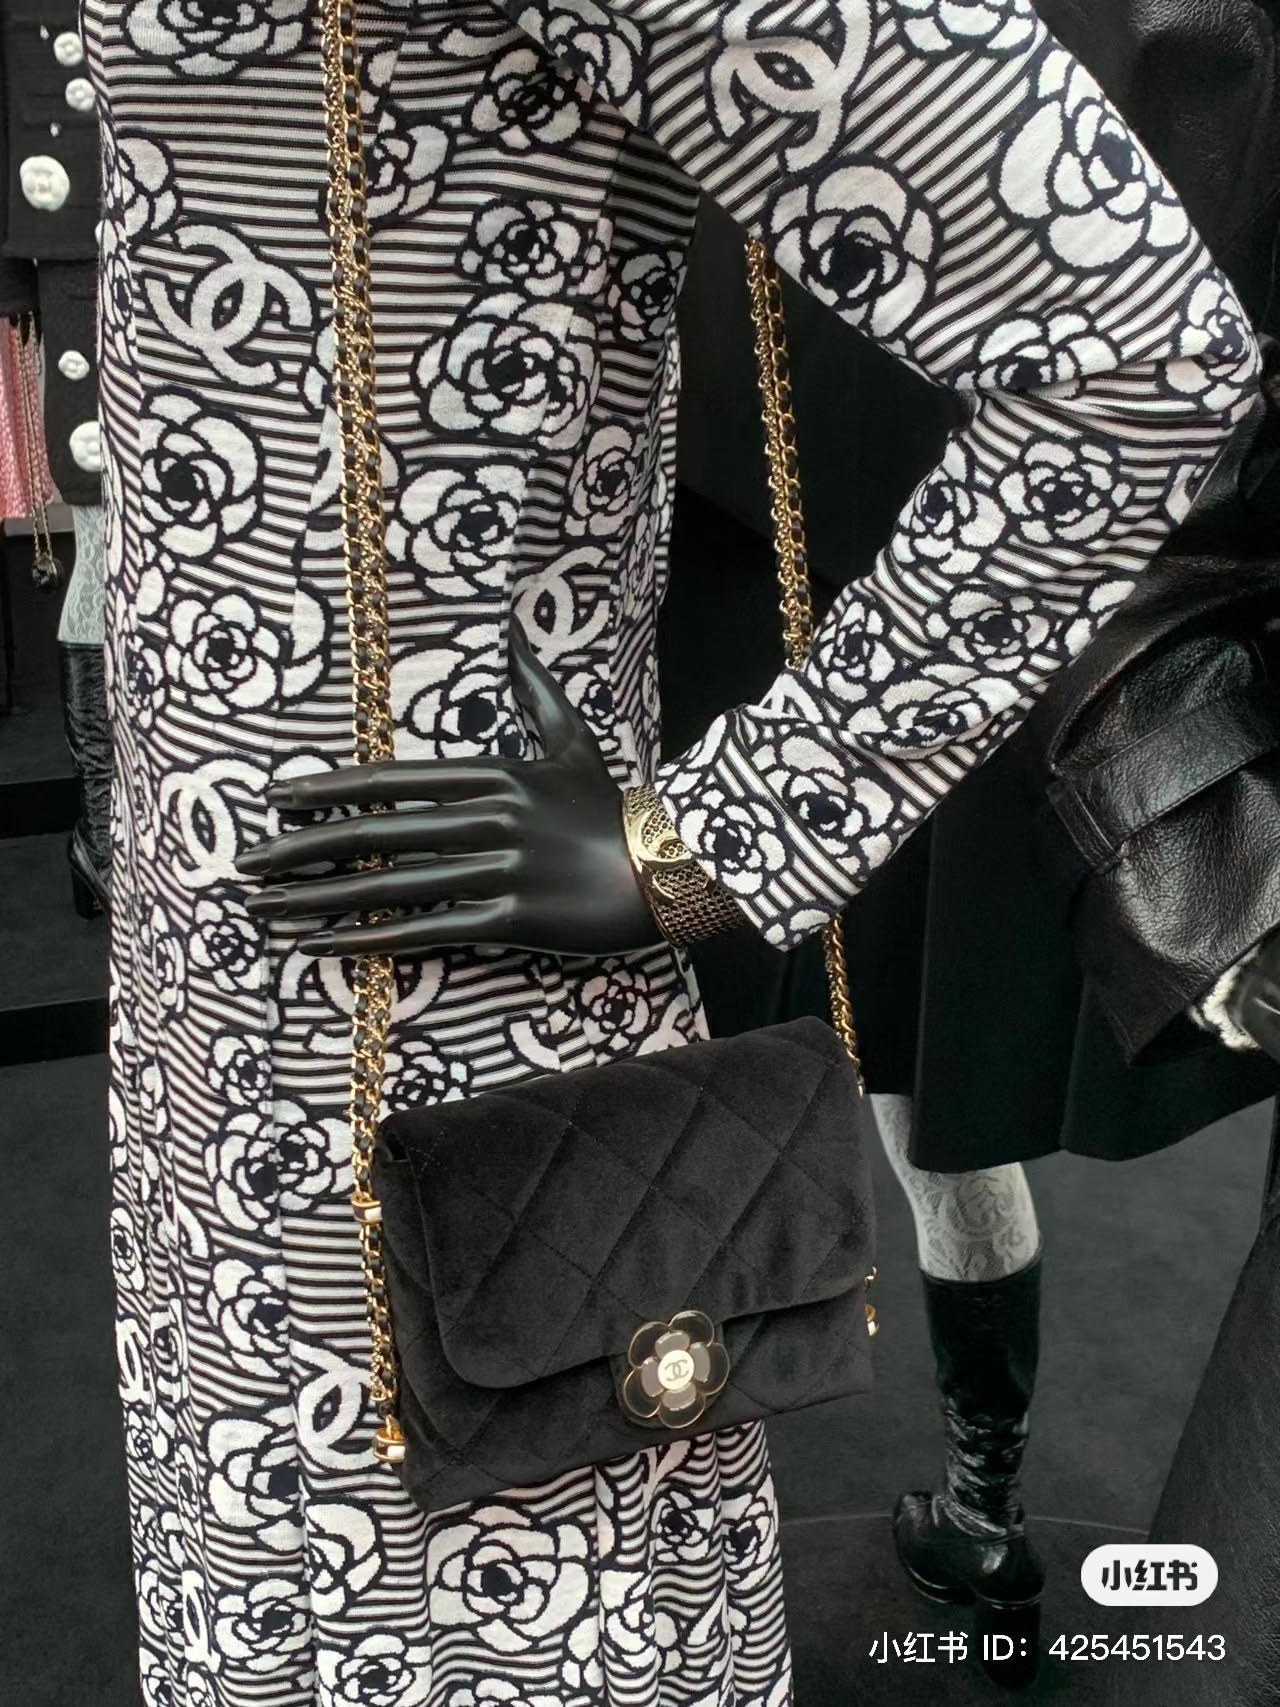 Mini flap bag with top handle, Wool tweed, lambski & gold-tone